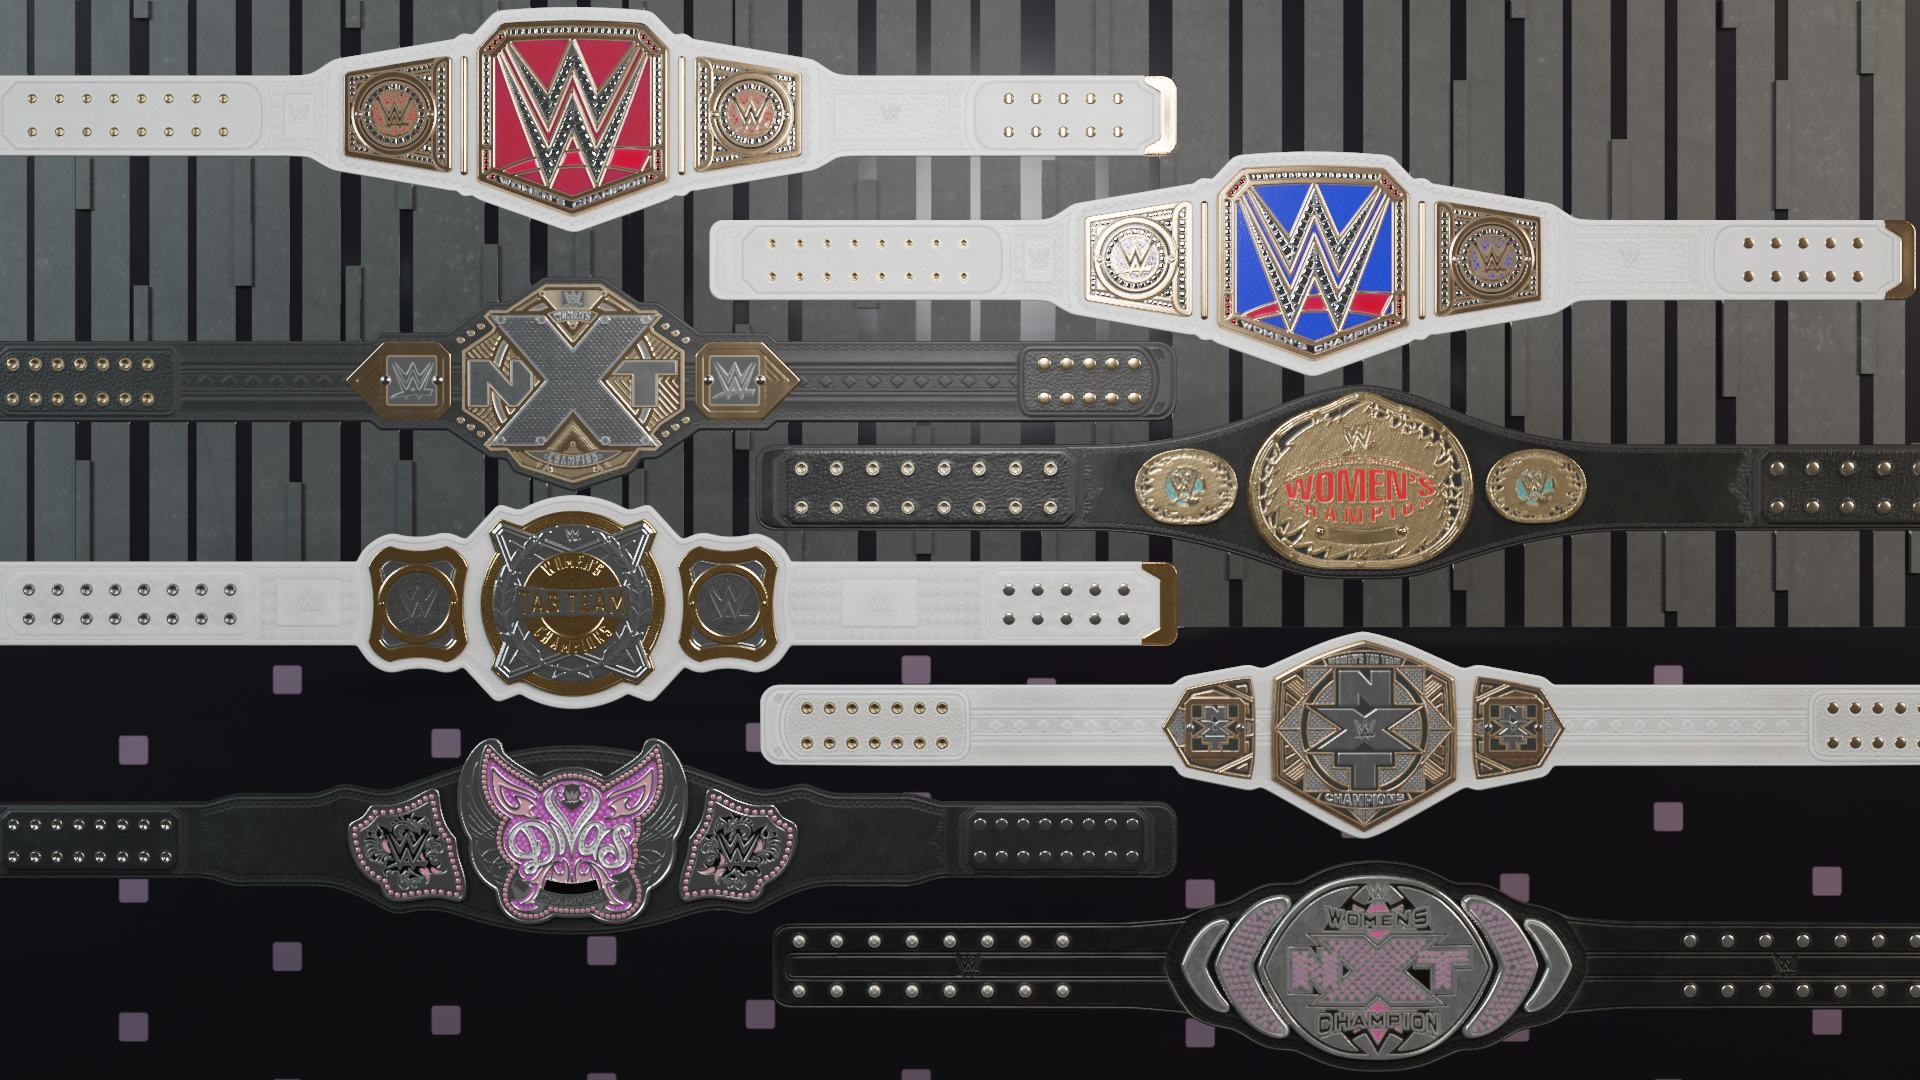 WWE 2K22 Unlockables Guide: Wrestlers, arenas, and title belts